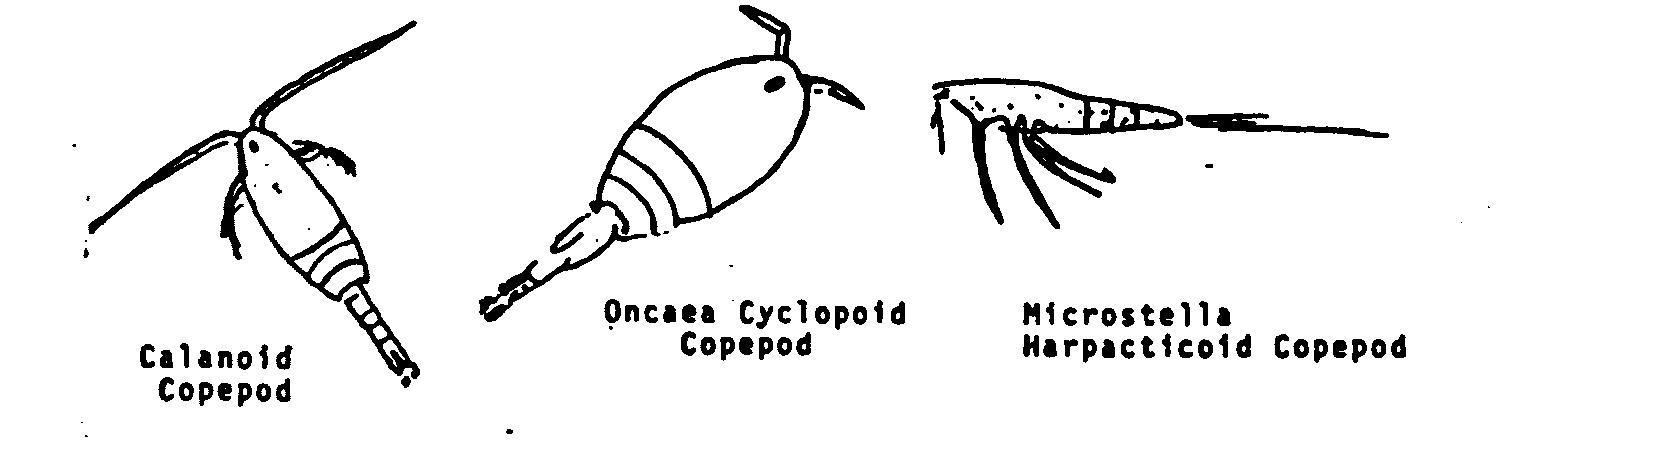 copepods.JPG (62315 bytes)